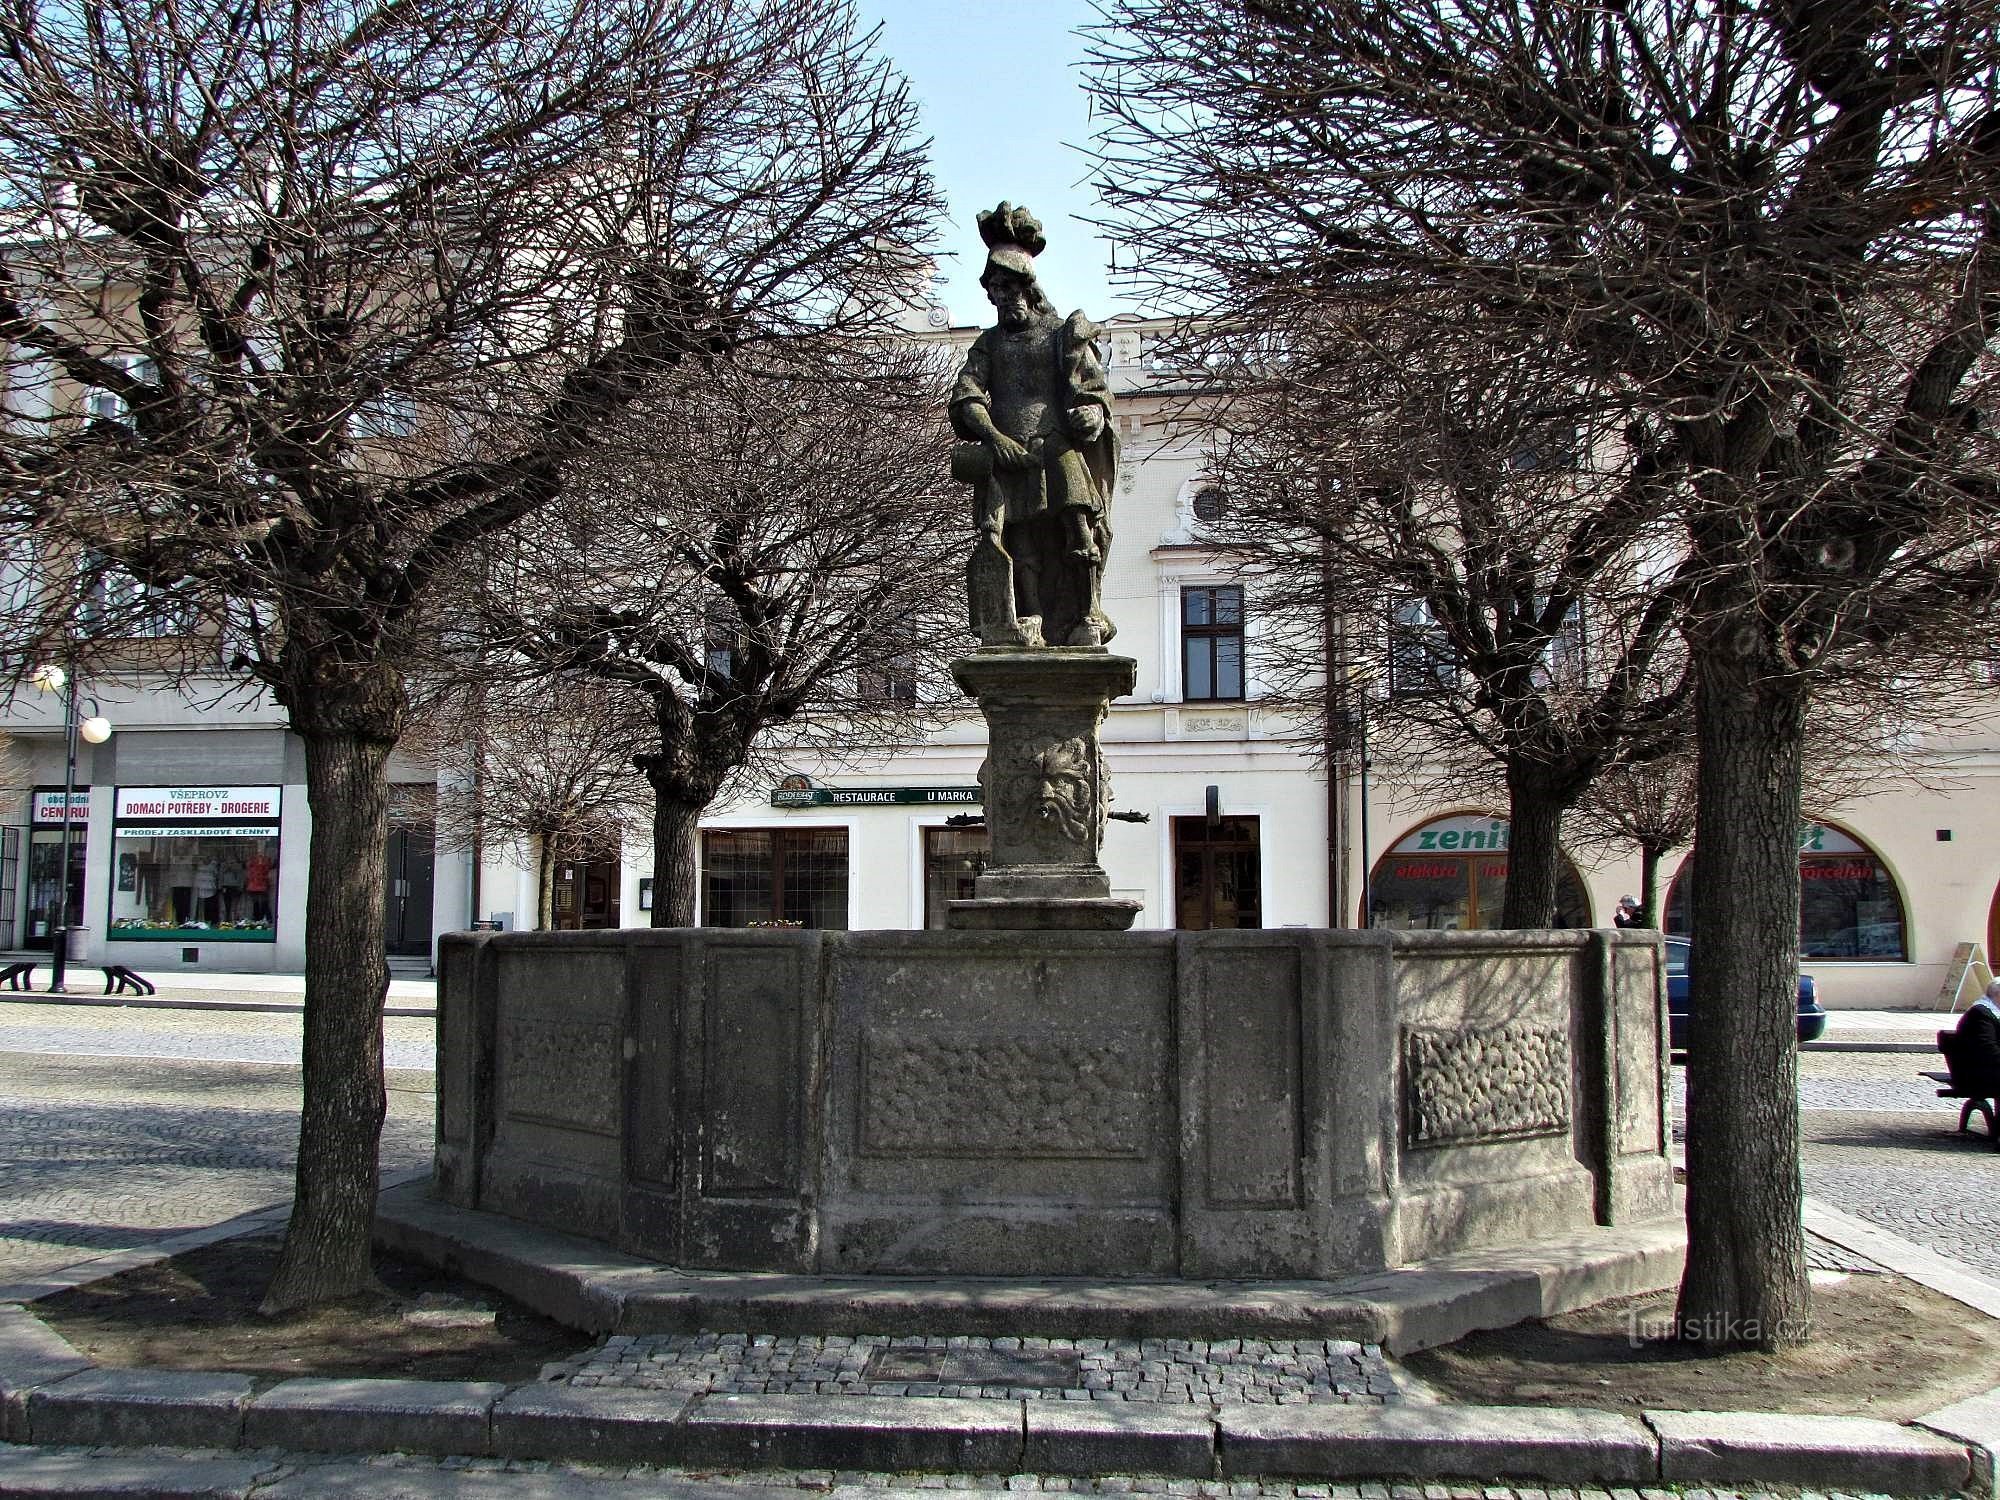 St. Florian's fontein